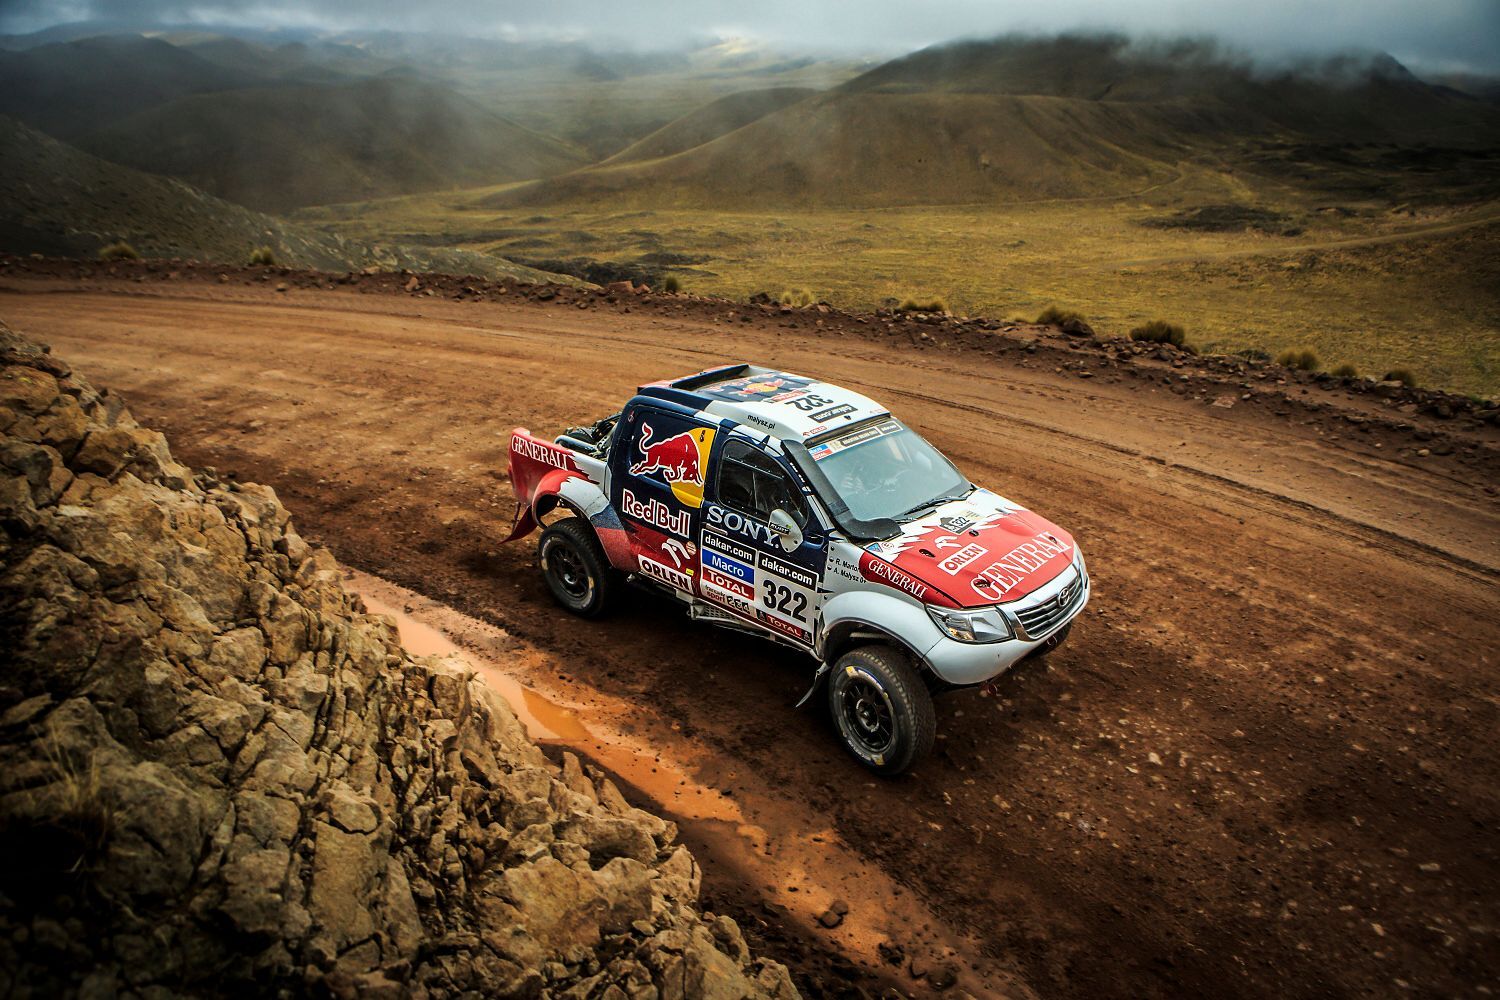 Dakar 2014: Adam Malysz, Toyota